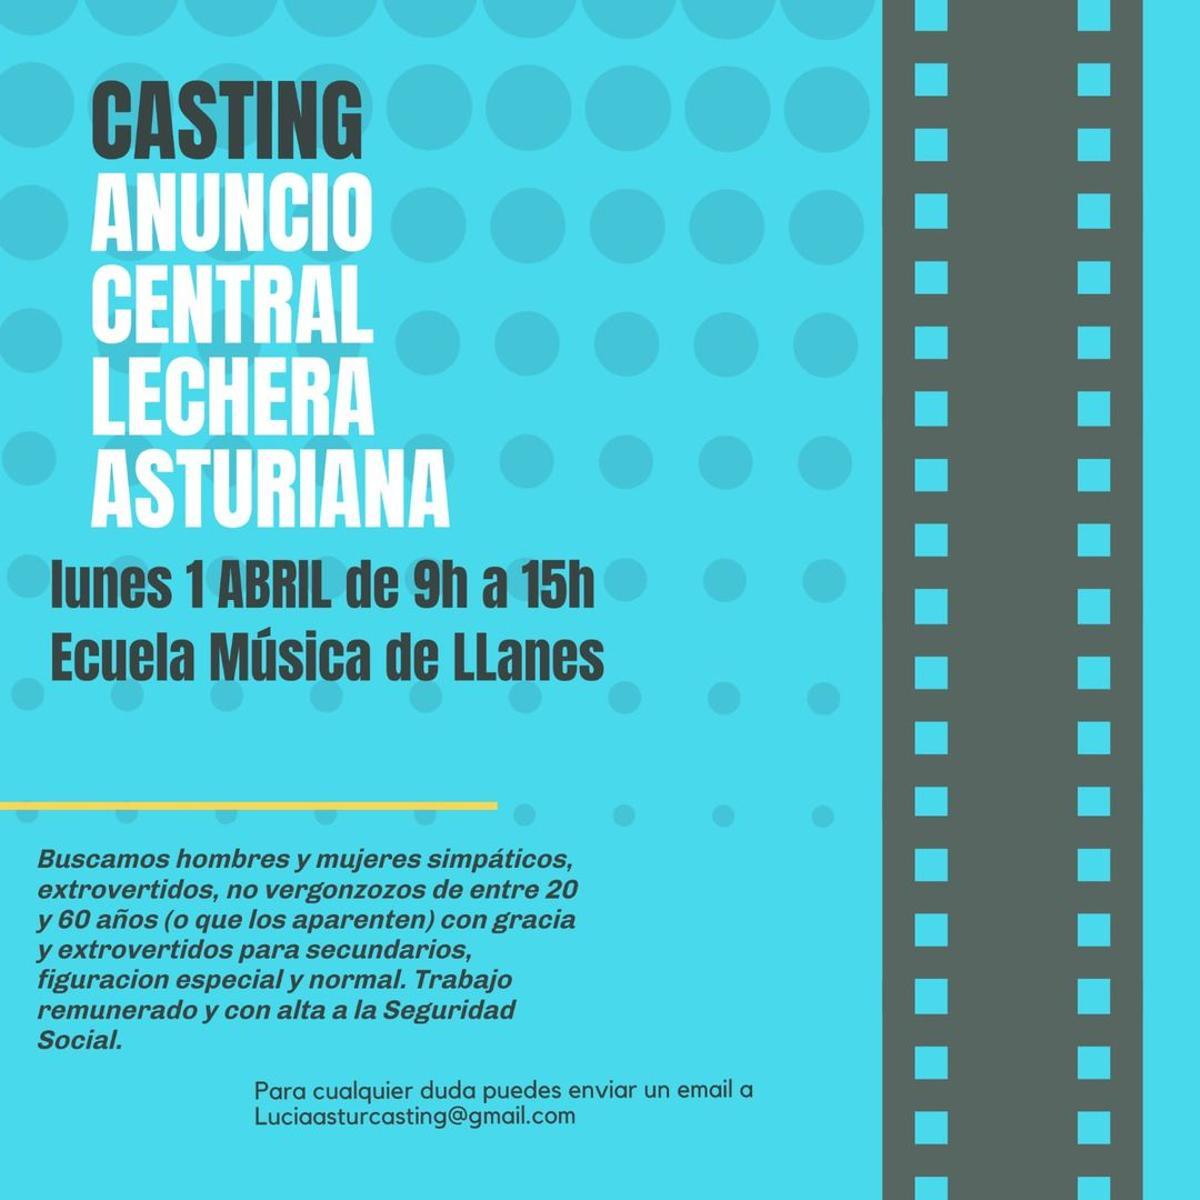 El anuncio del casting de Central Lechera Asturiana.